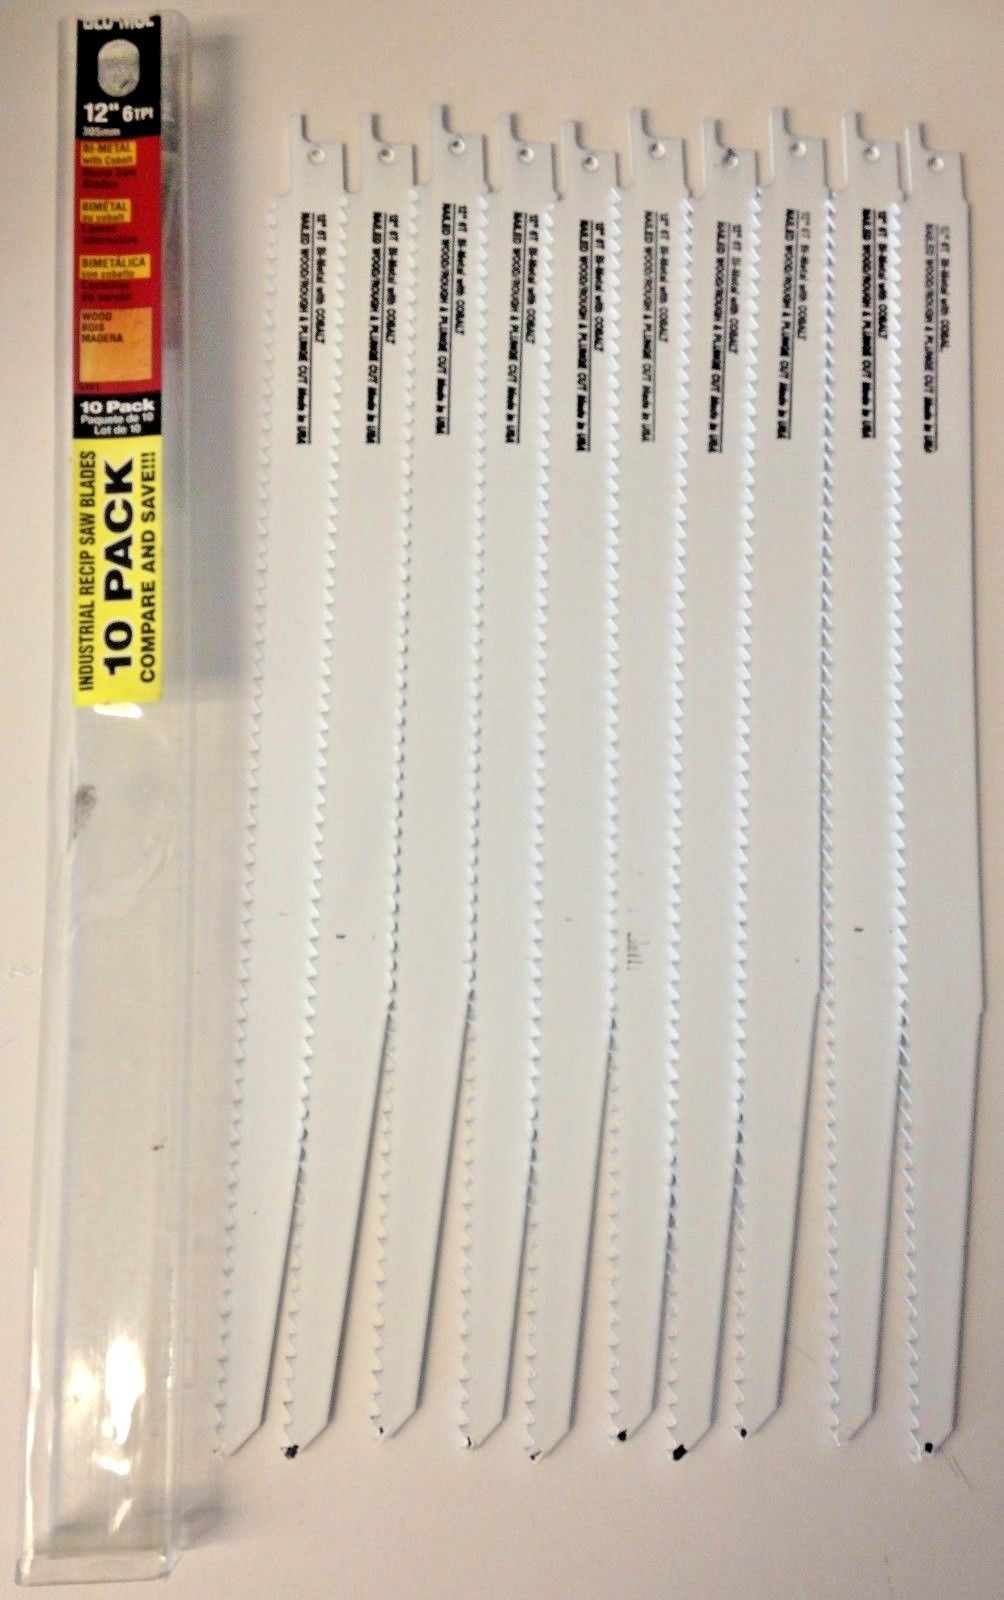 Blu Mol 6483 12" x 6 TPI Reciprocating Saw Blades 10 Pack USA